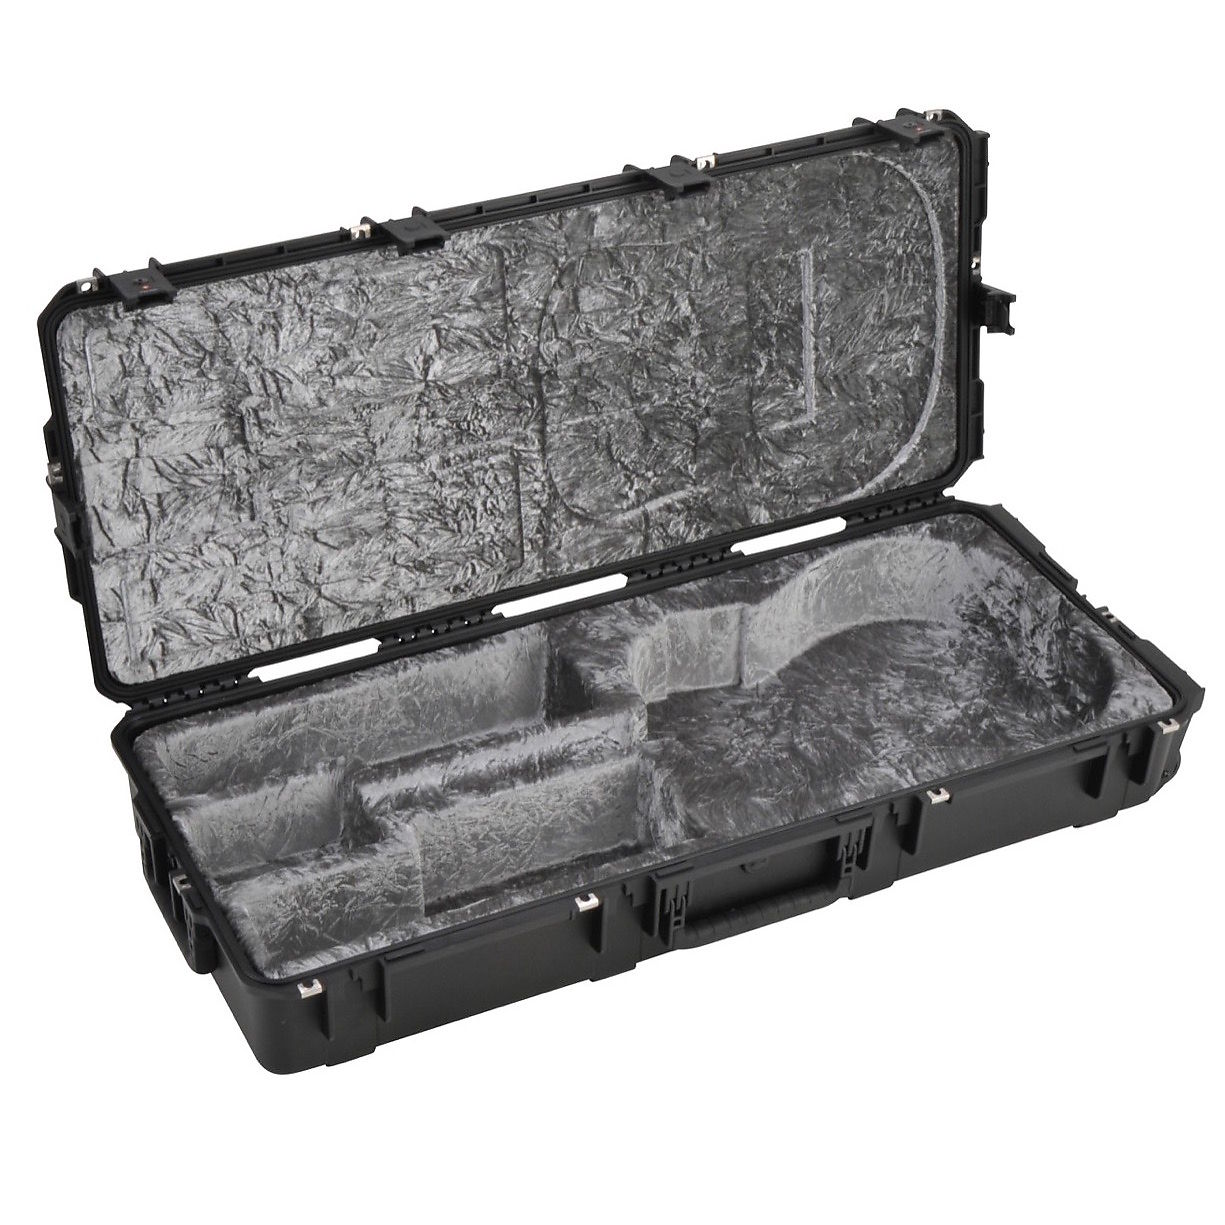 SKB 3i Series Waterproof Rolling Acoustic Guitar Case, Black, 3I-4217-18